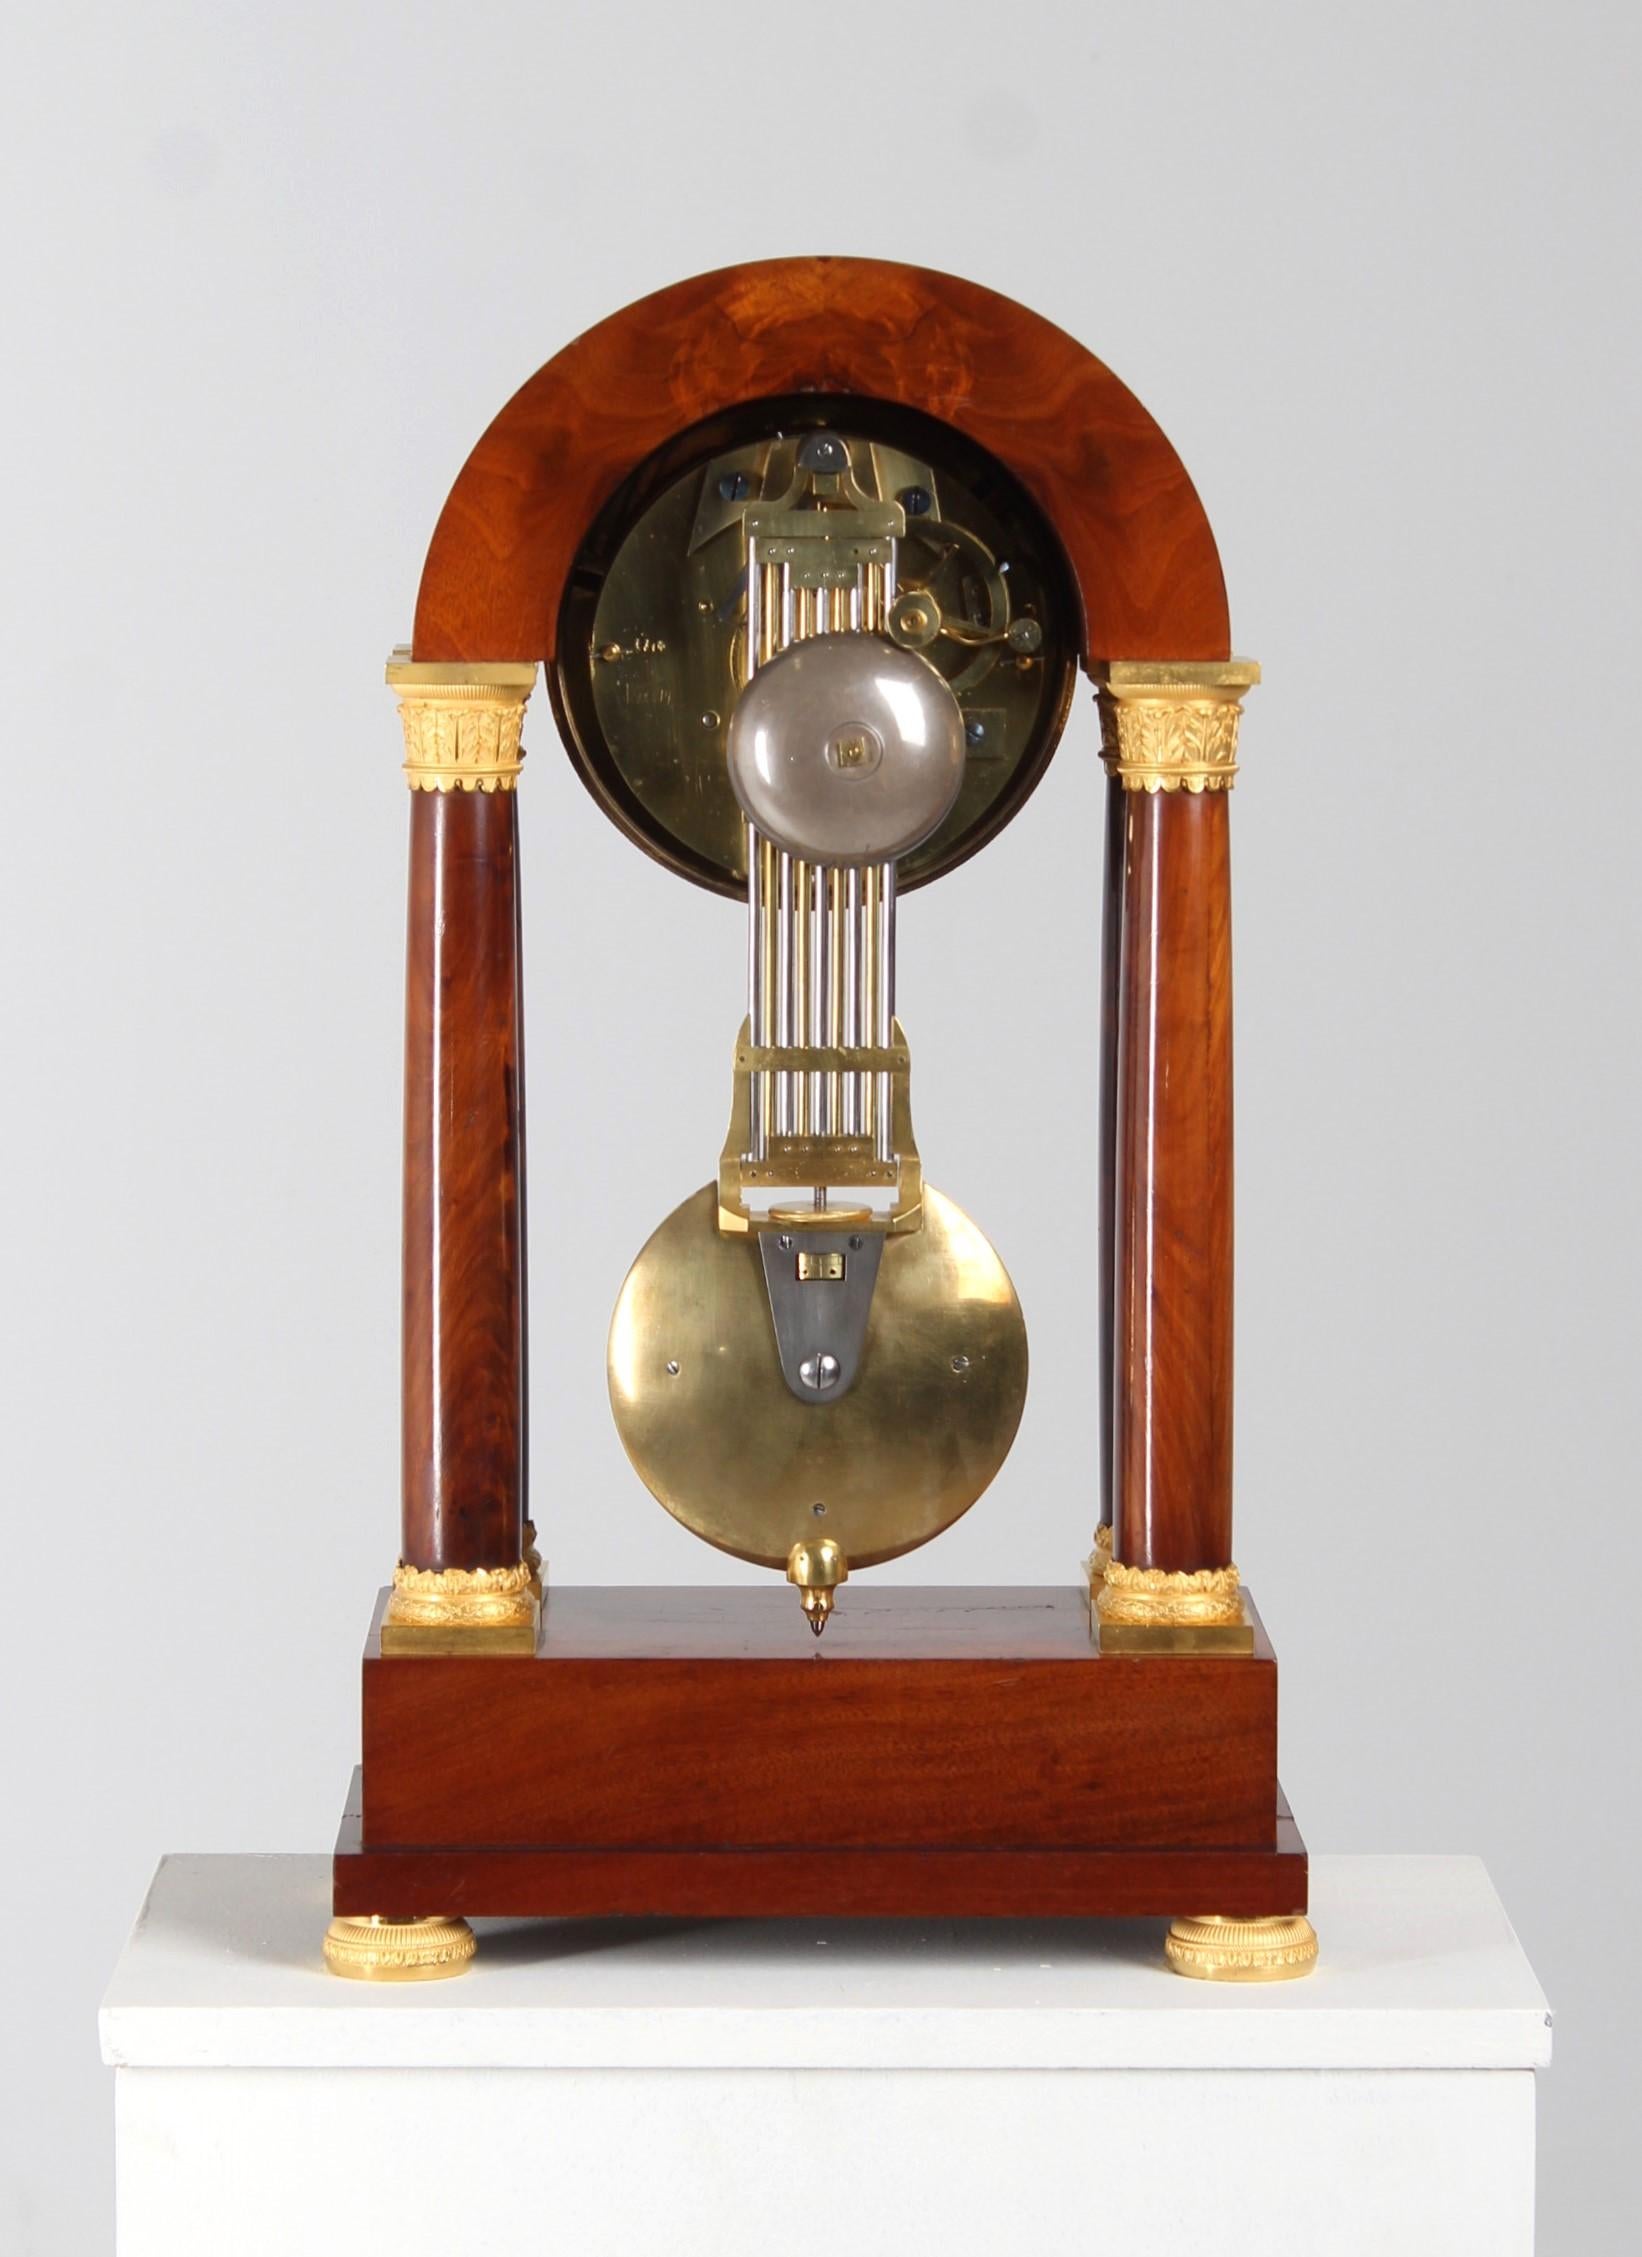 19th Century Regulator by Tarault Jeune, Precision Portal Clock, Paris, c. 1825 For Sale 2